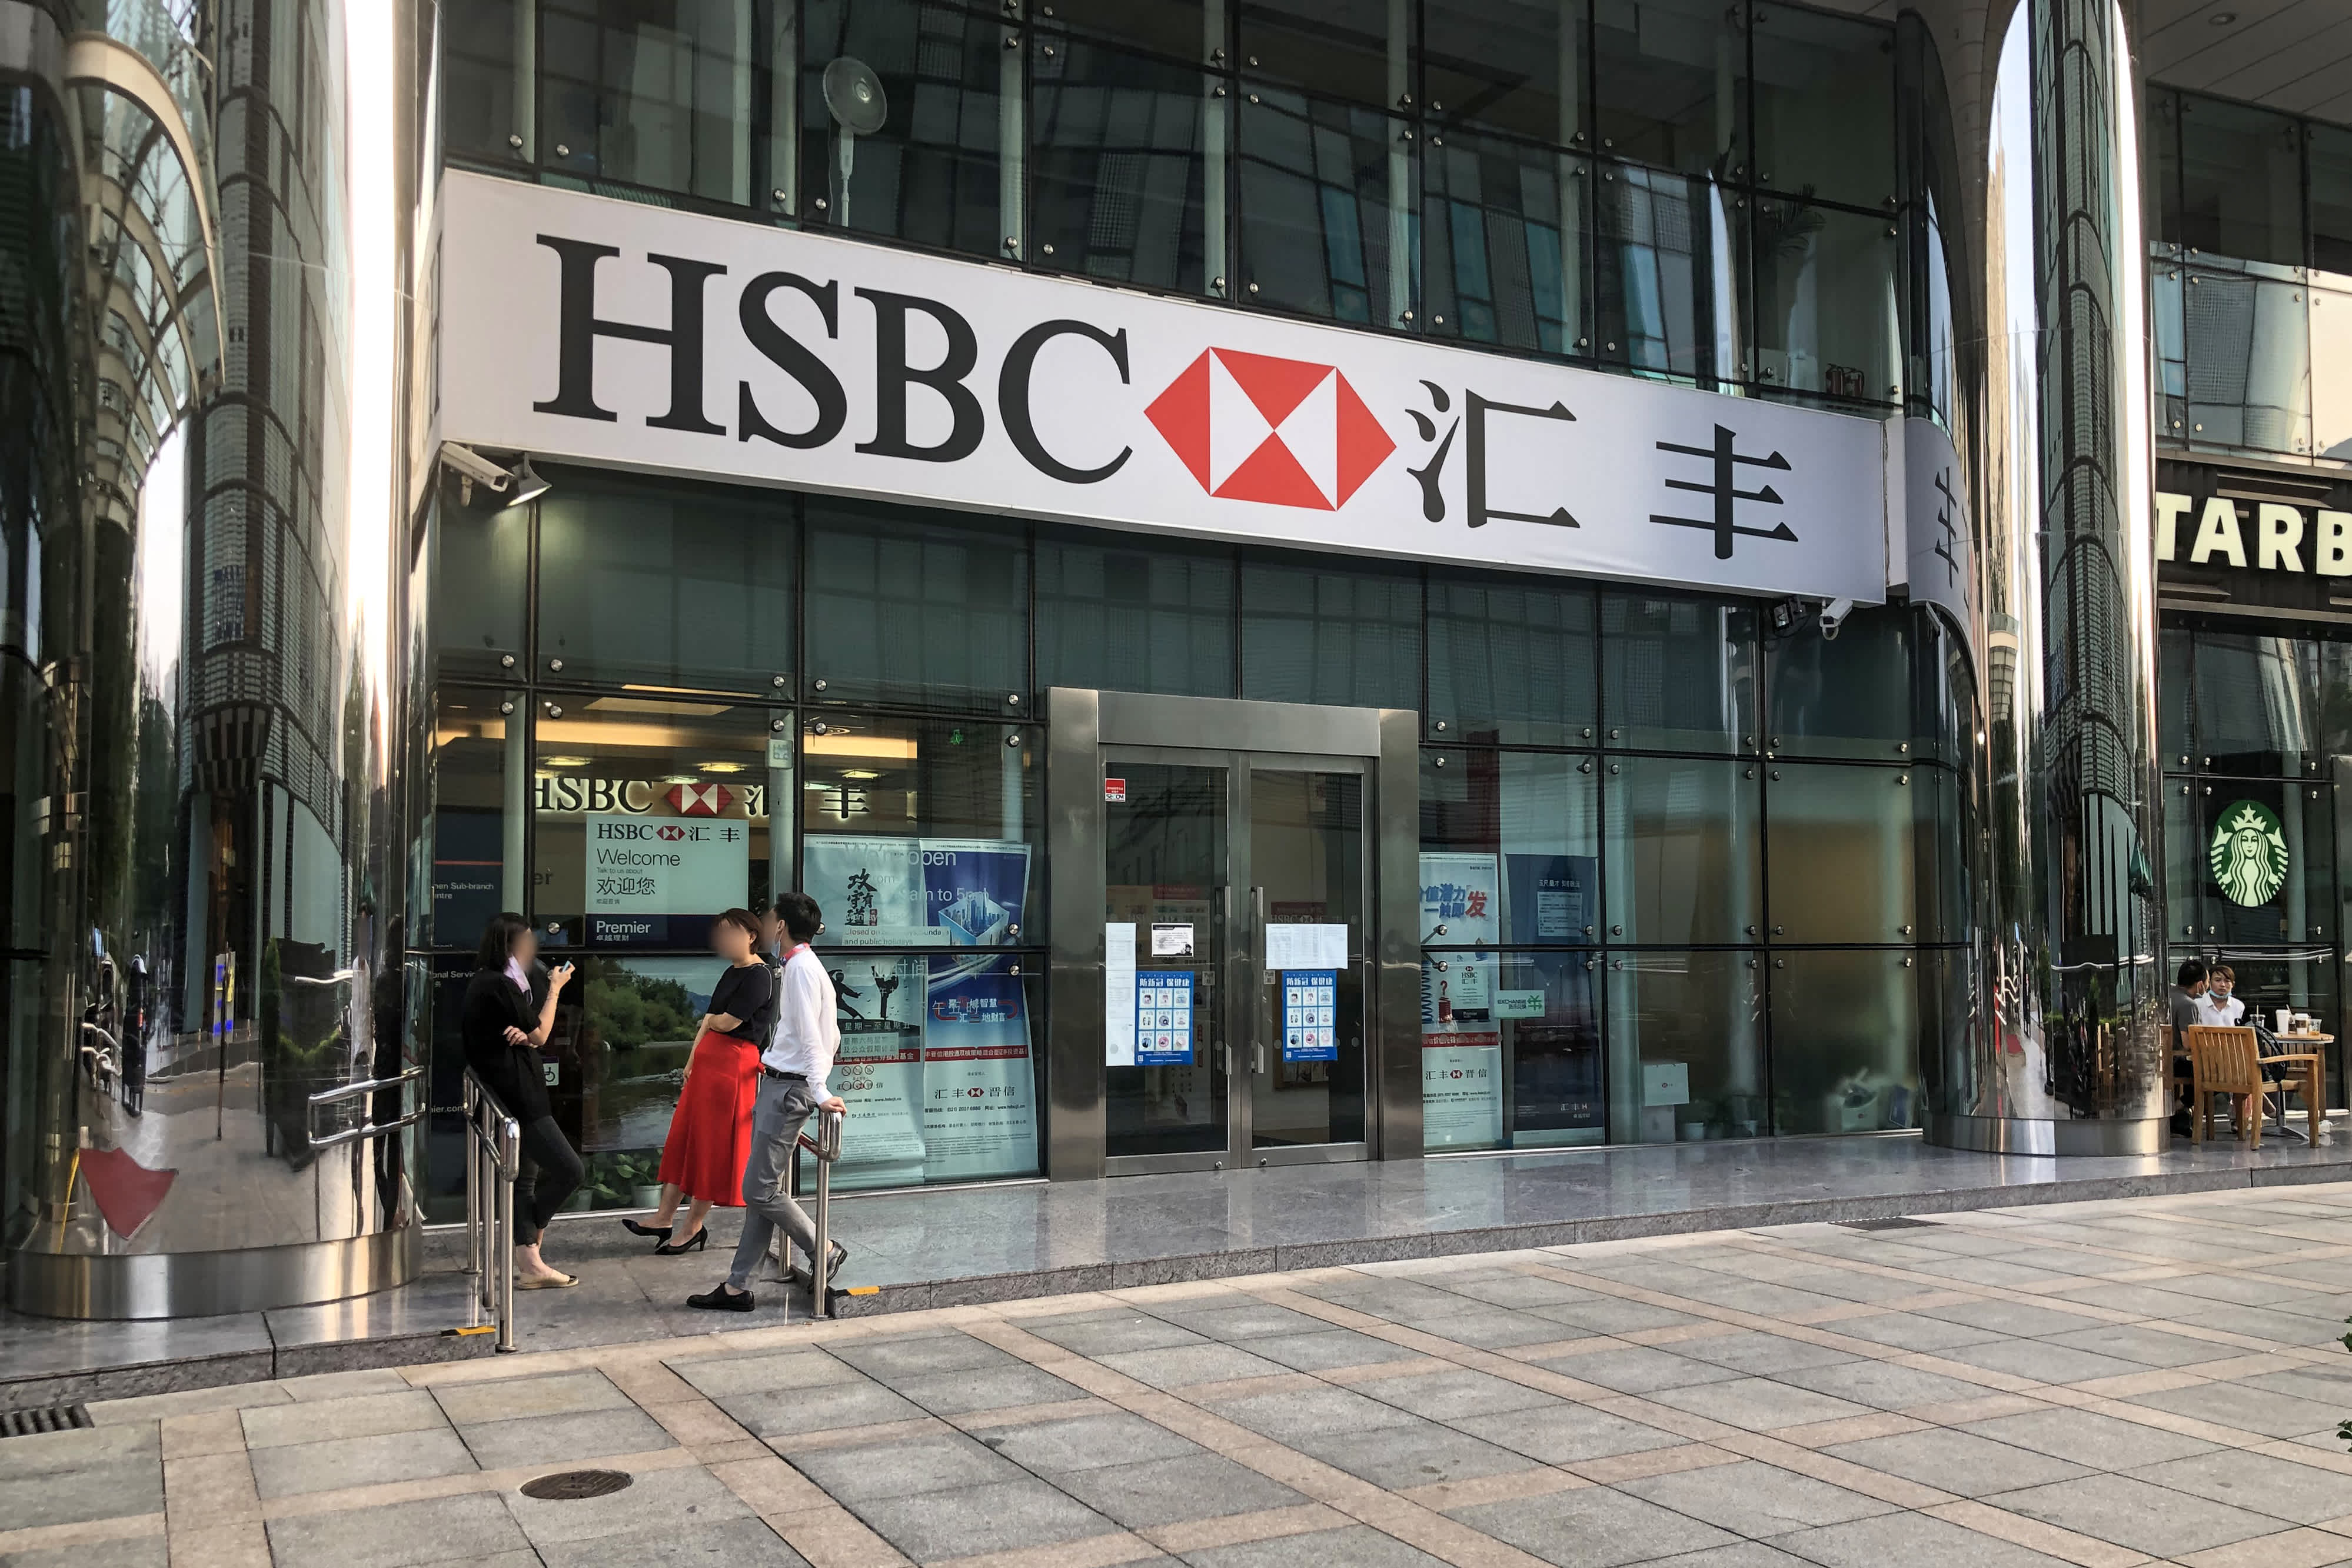 HSBC Suspends Senior Executive Over Climate Remarks